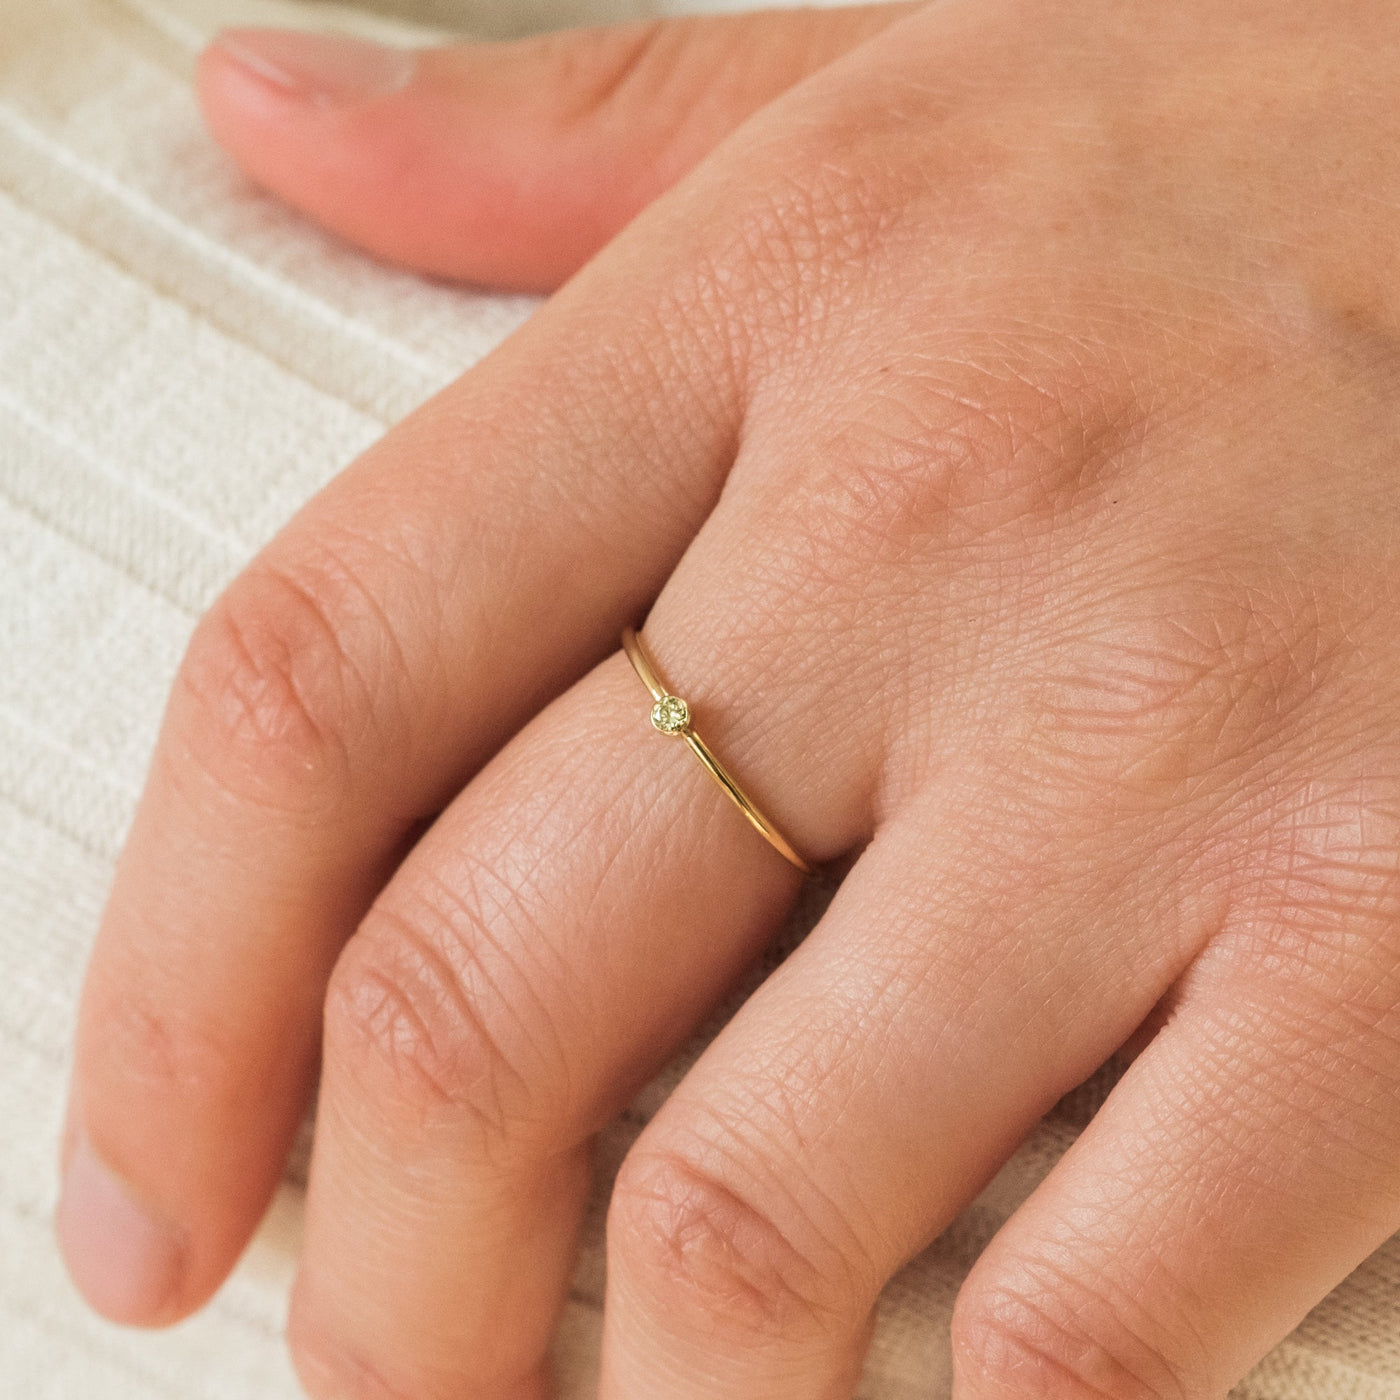 August Birthstone Ring (Peridot) | Simple & Dainty Jewelry